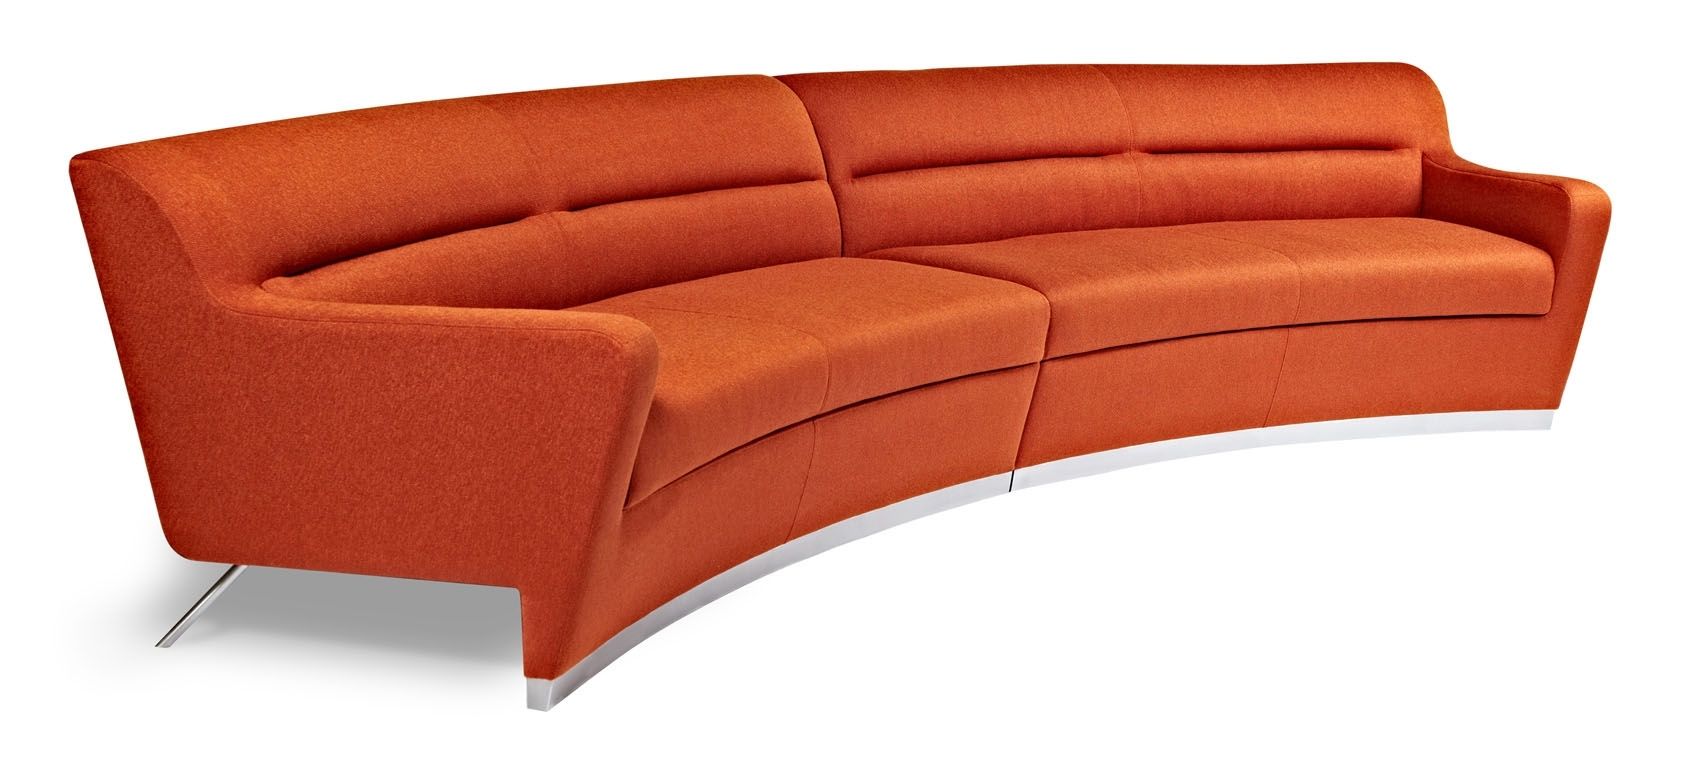 American Leather Niagara Sectional Sofa | Modern Furniture In Niagara Sectional Sofas (View 4 of 10)